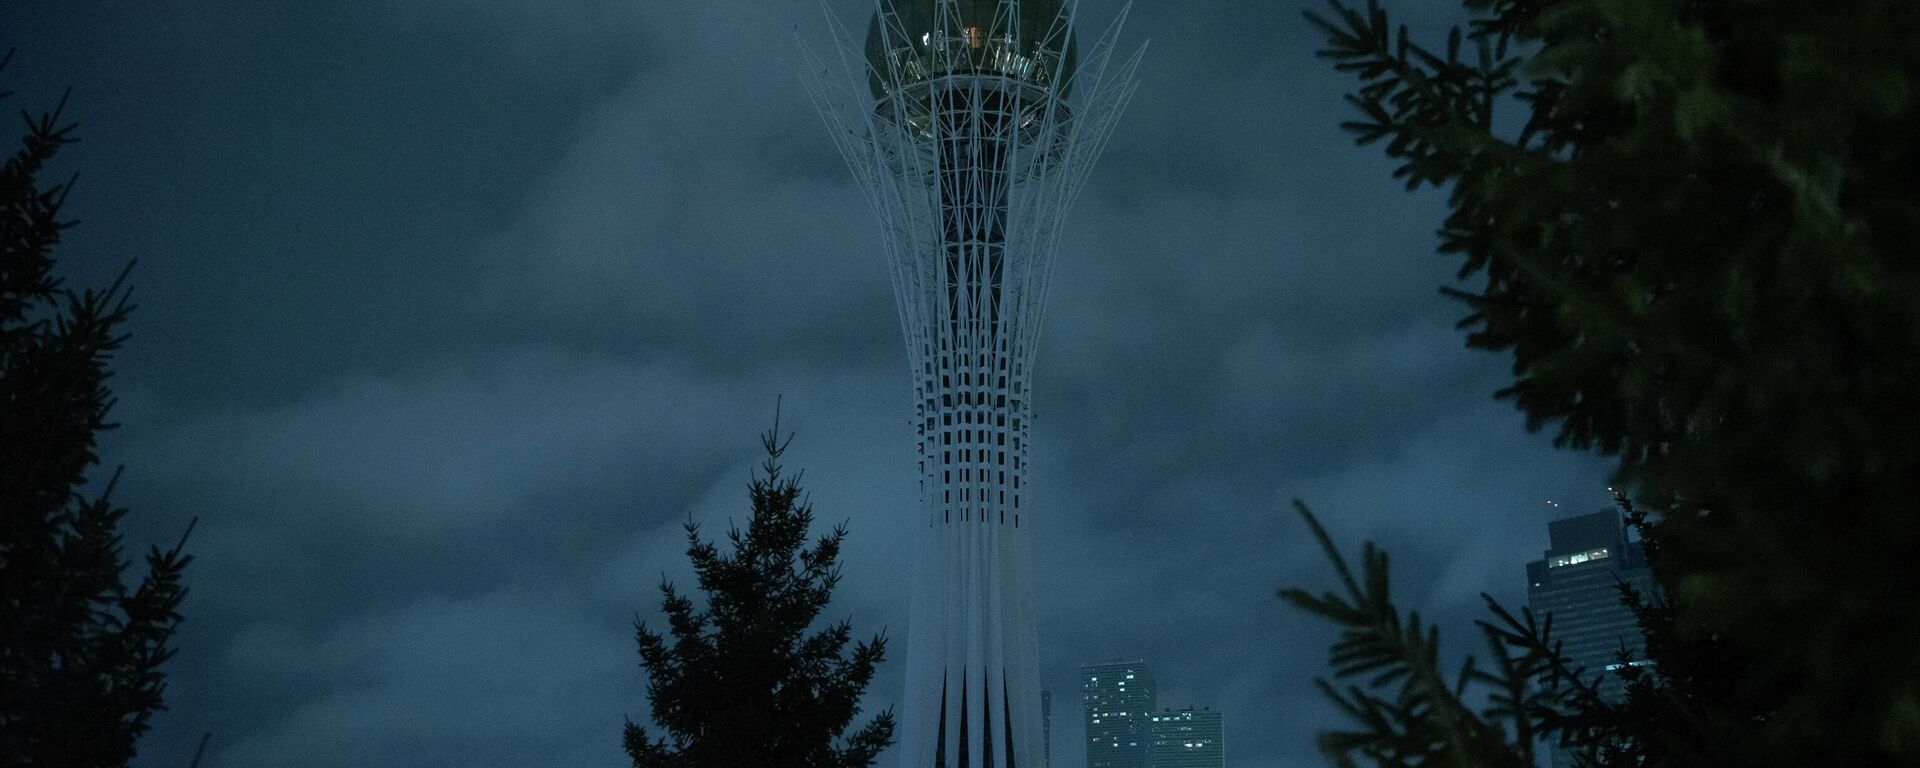 Акция Час Земли в Нур-Султане, 2022 год - Sputnik Казахстан, 1920, 30.03.2022